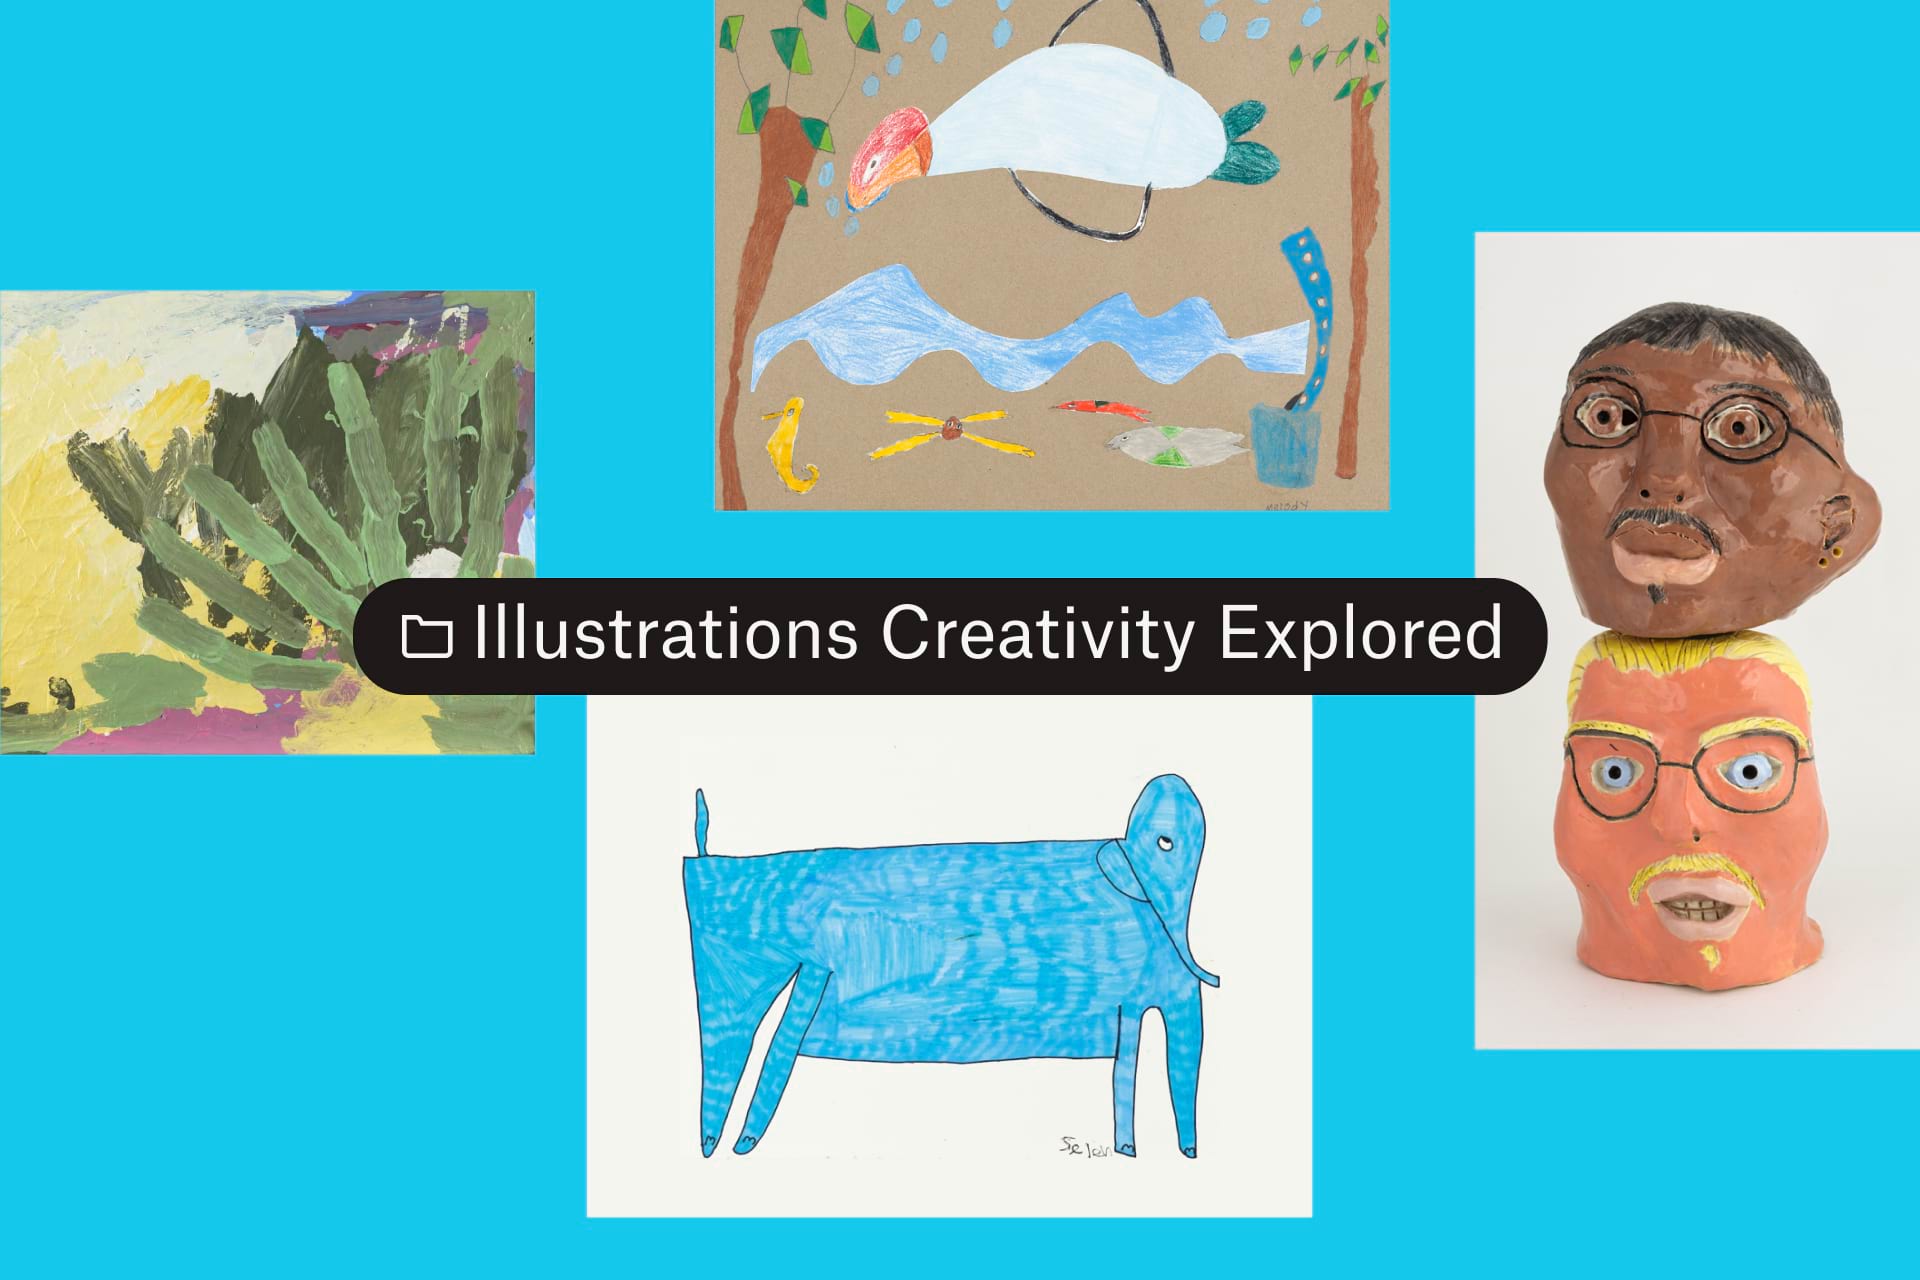 Dossier intitulé “Illustrations Creativity Explored”, avec quatre illustrations